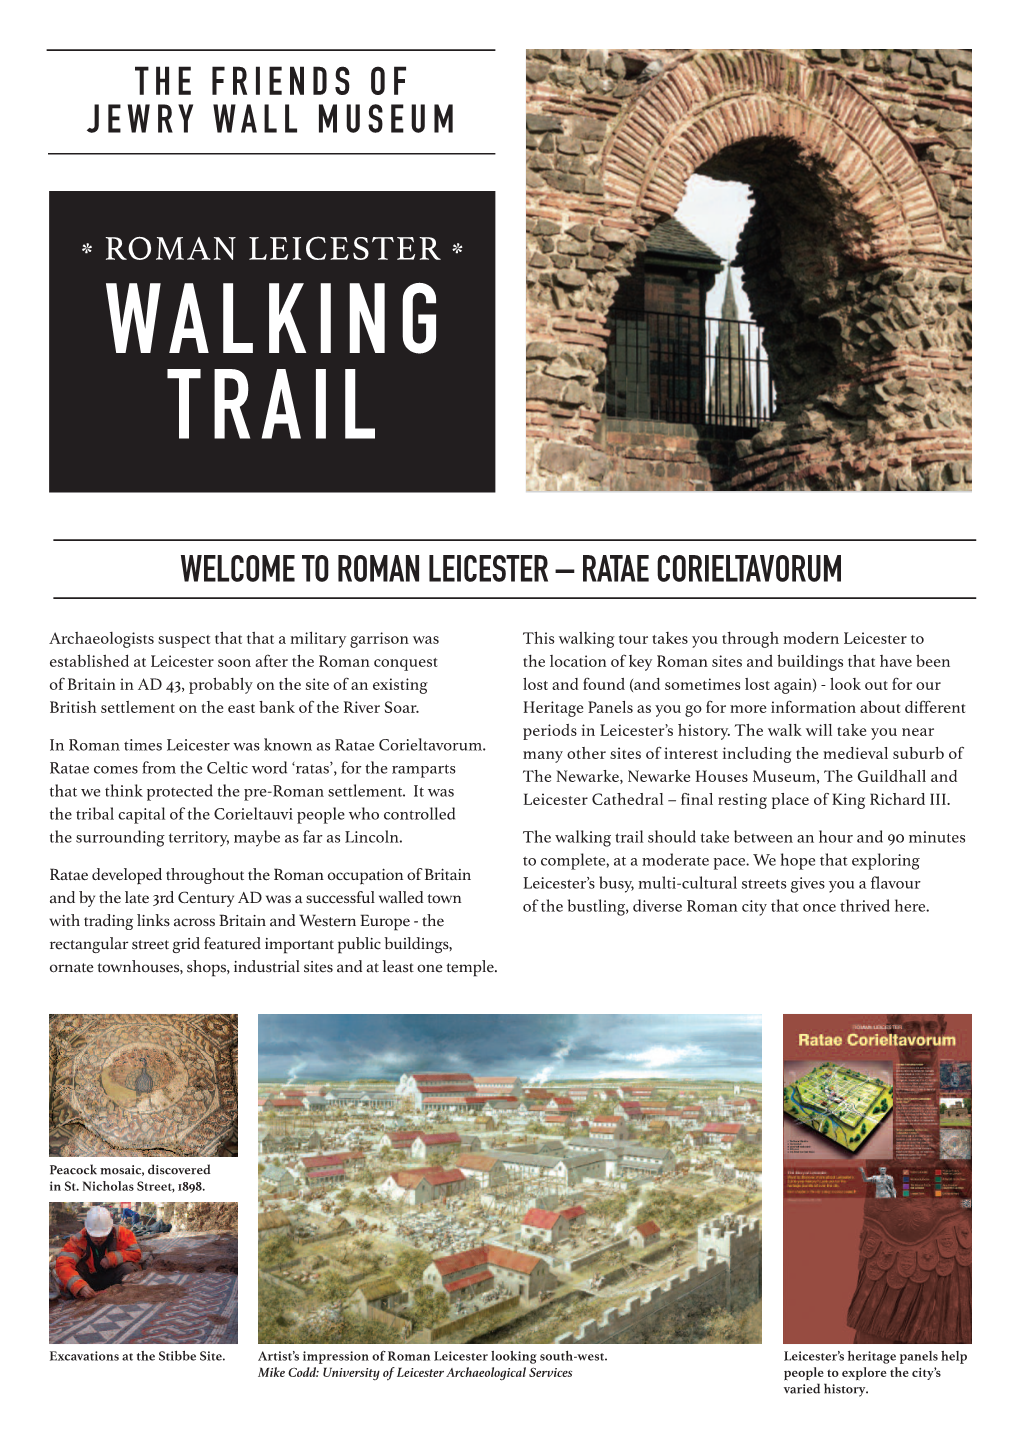 Roman Leicester * Walking Trail